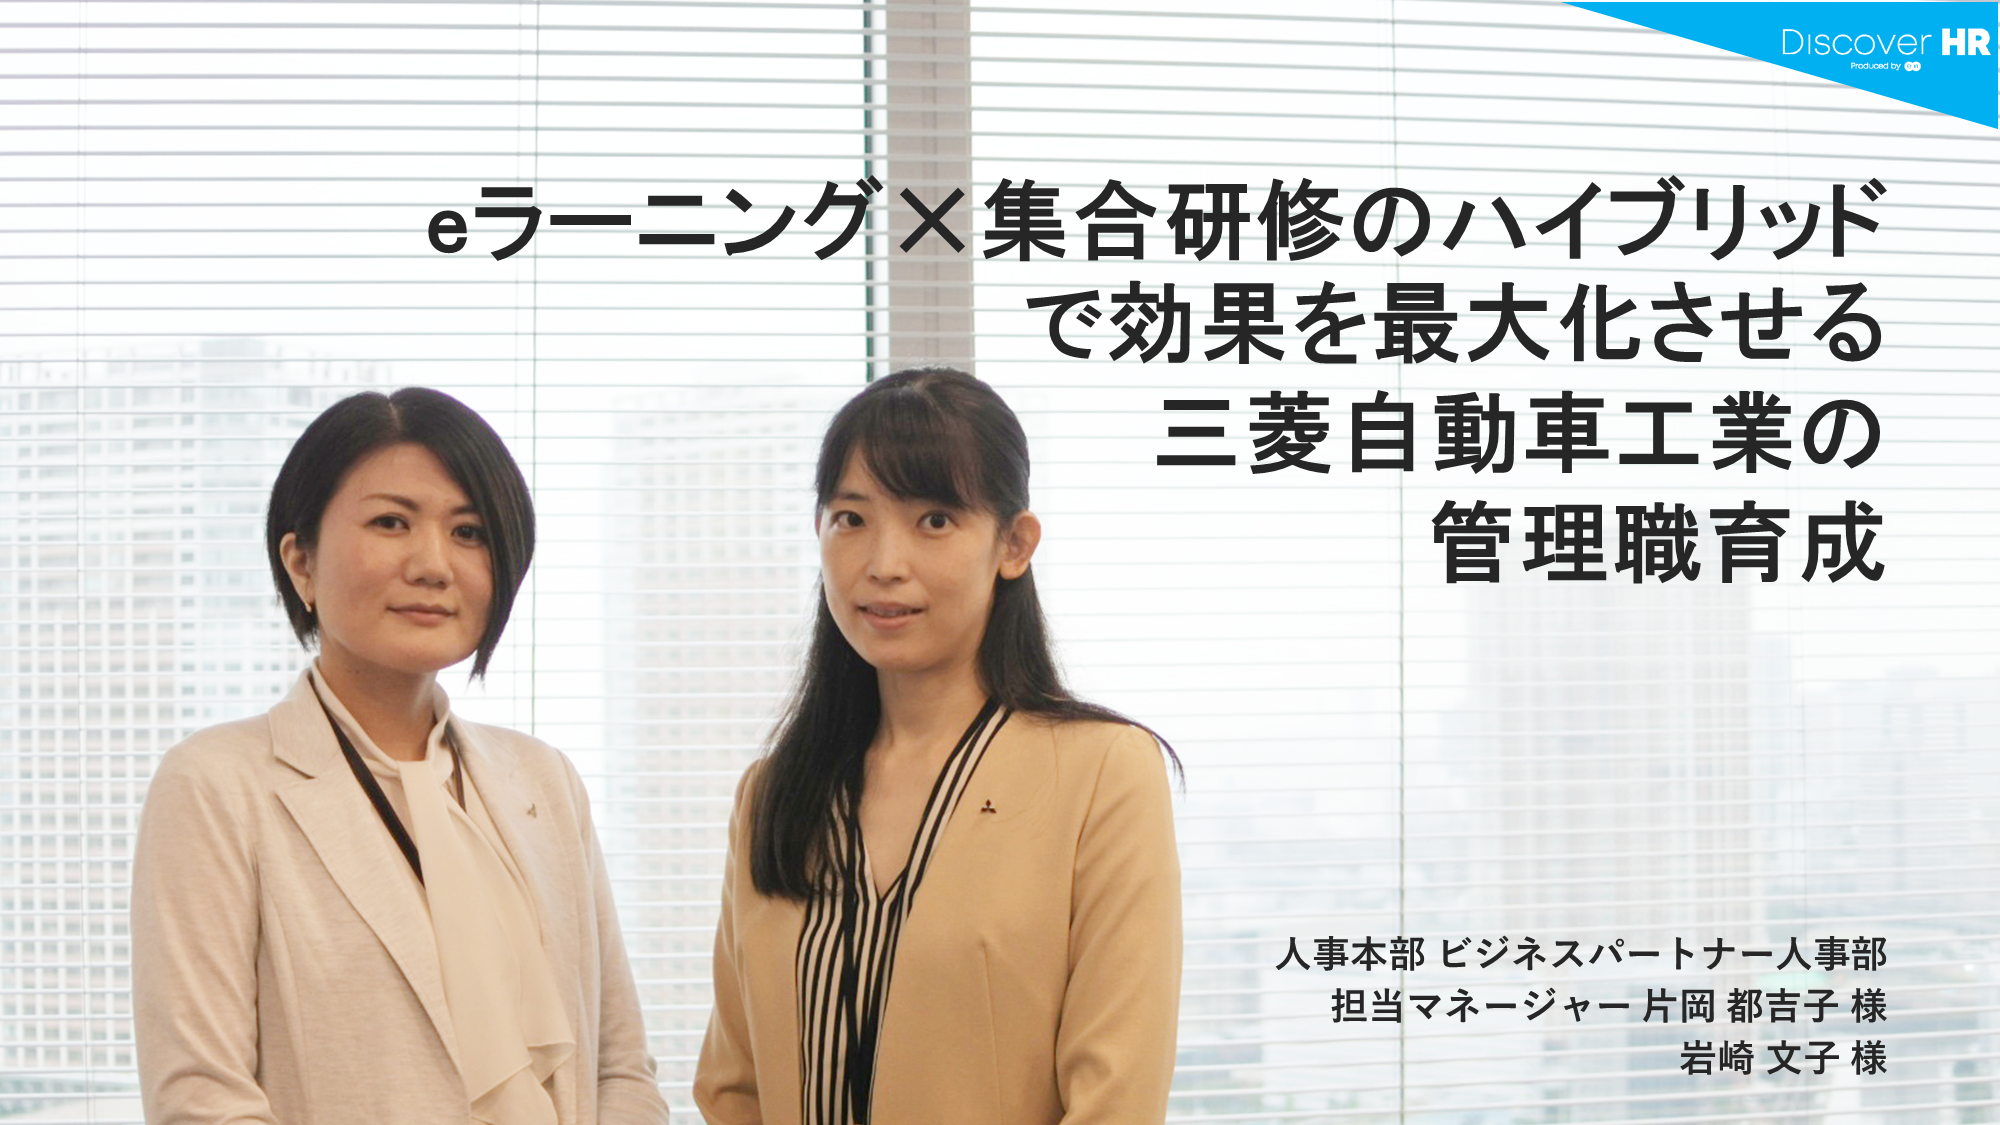 Discover HR Story |三菱自動車工業株式会社